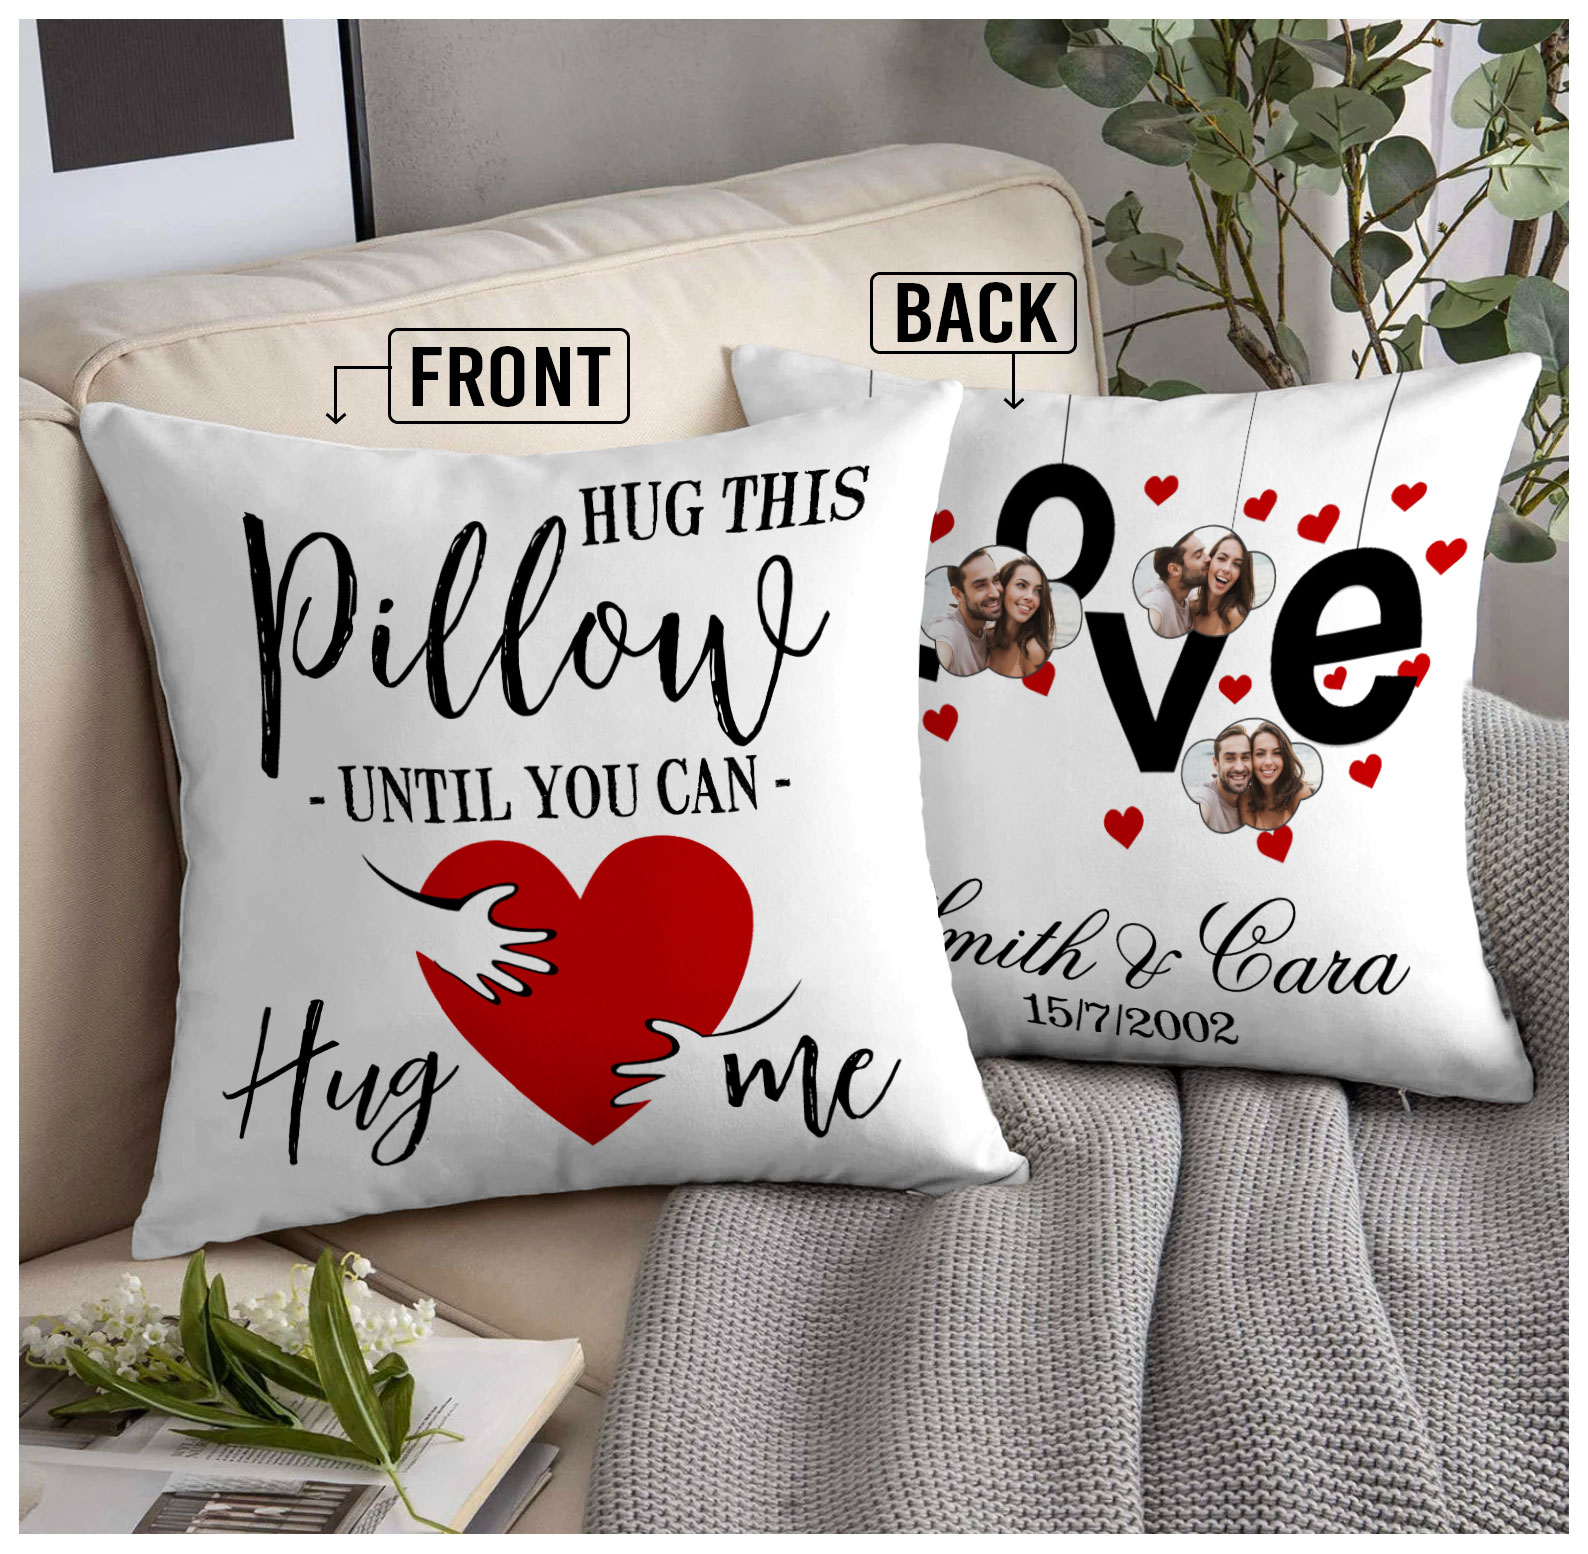 Sending You A Hug, Custom Photo Pillow, Personalized Pillows